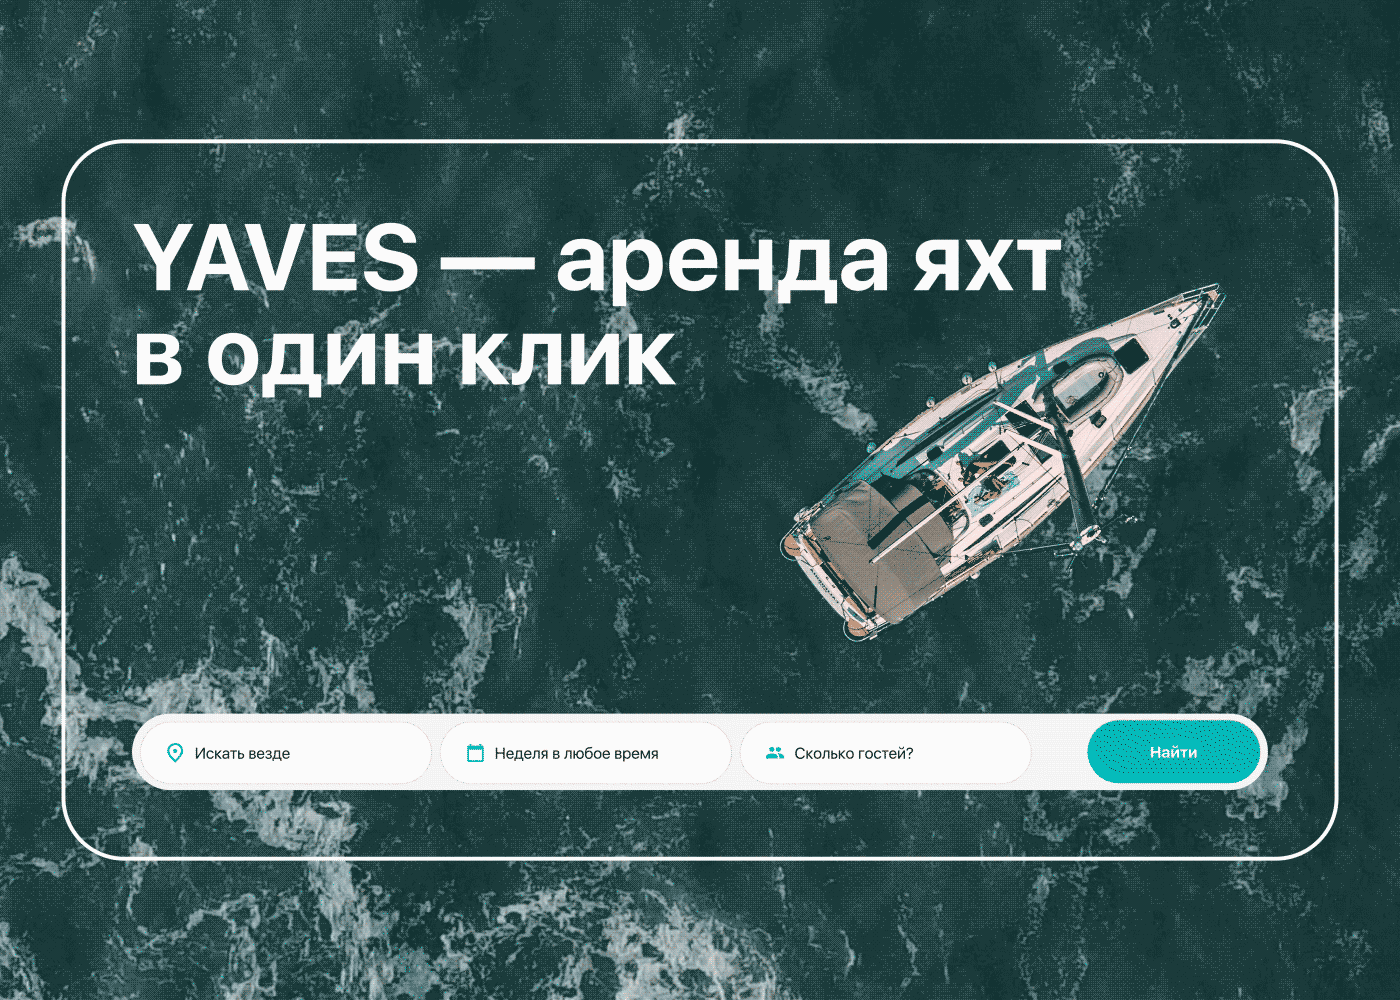 YAVES — аренда яхт в один клик